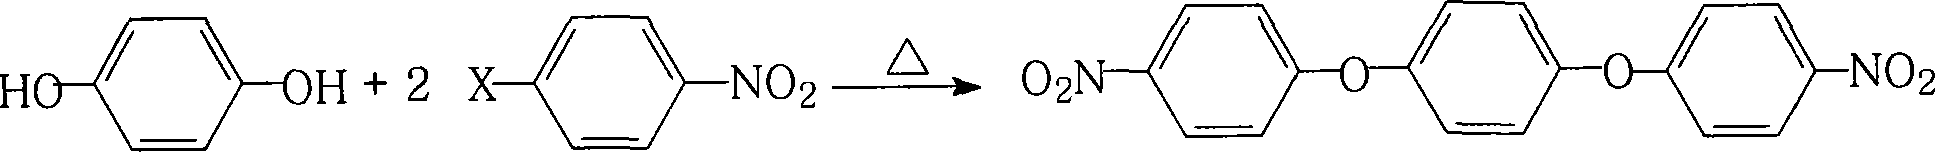 Method for preparing 1,4-di(4-amino-benzene oxygen) benzene